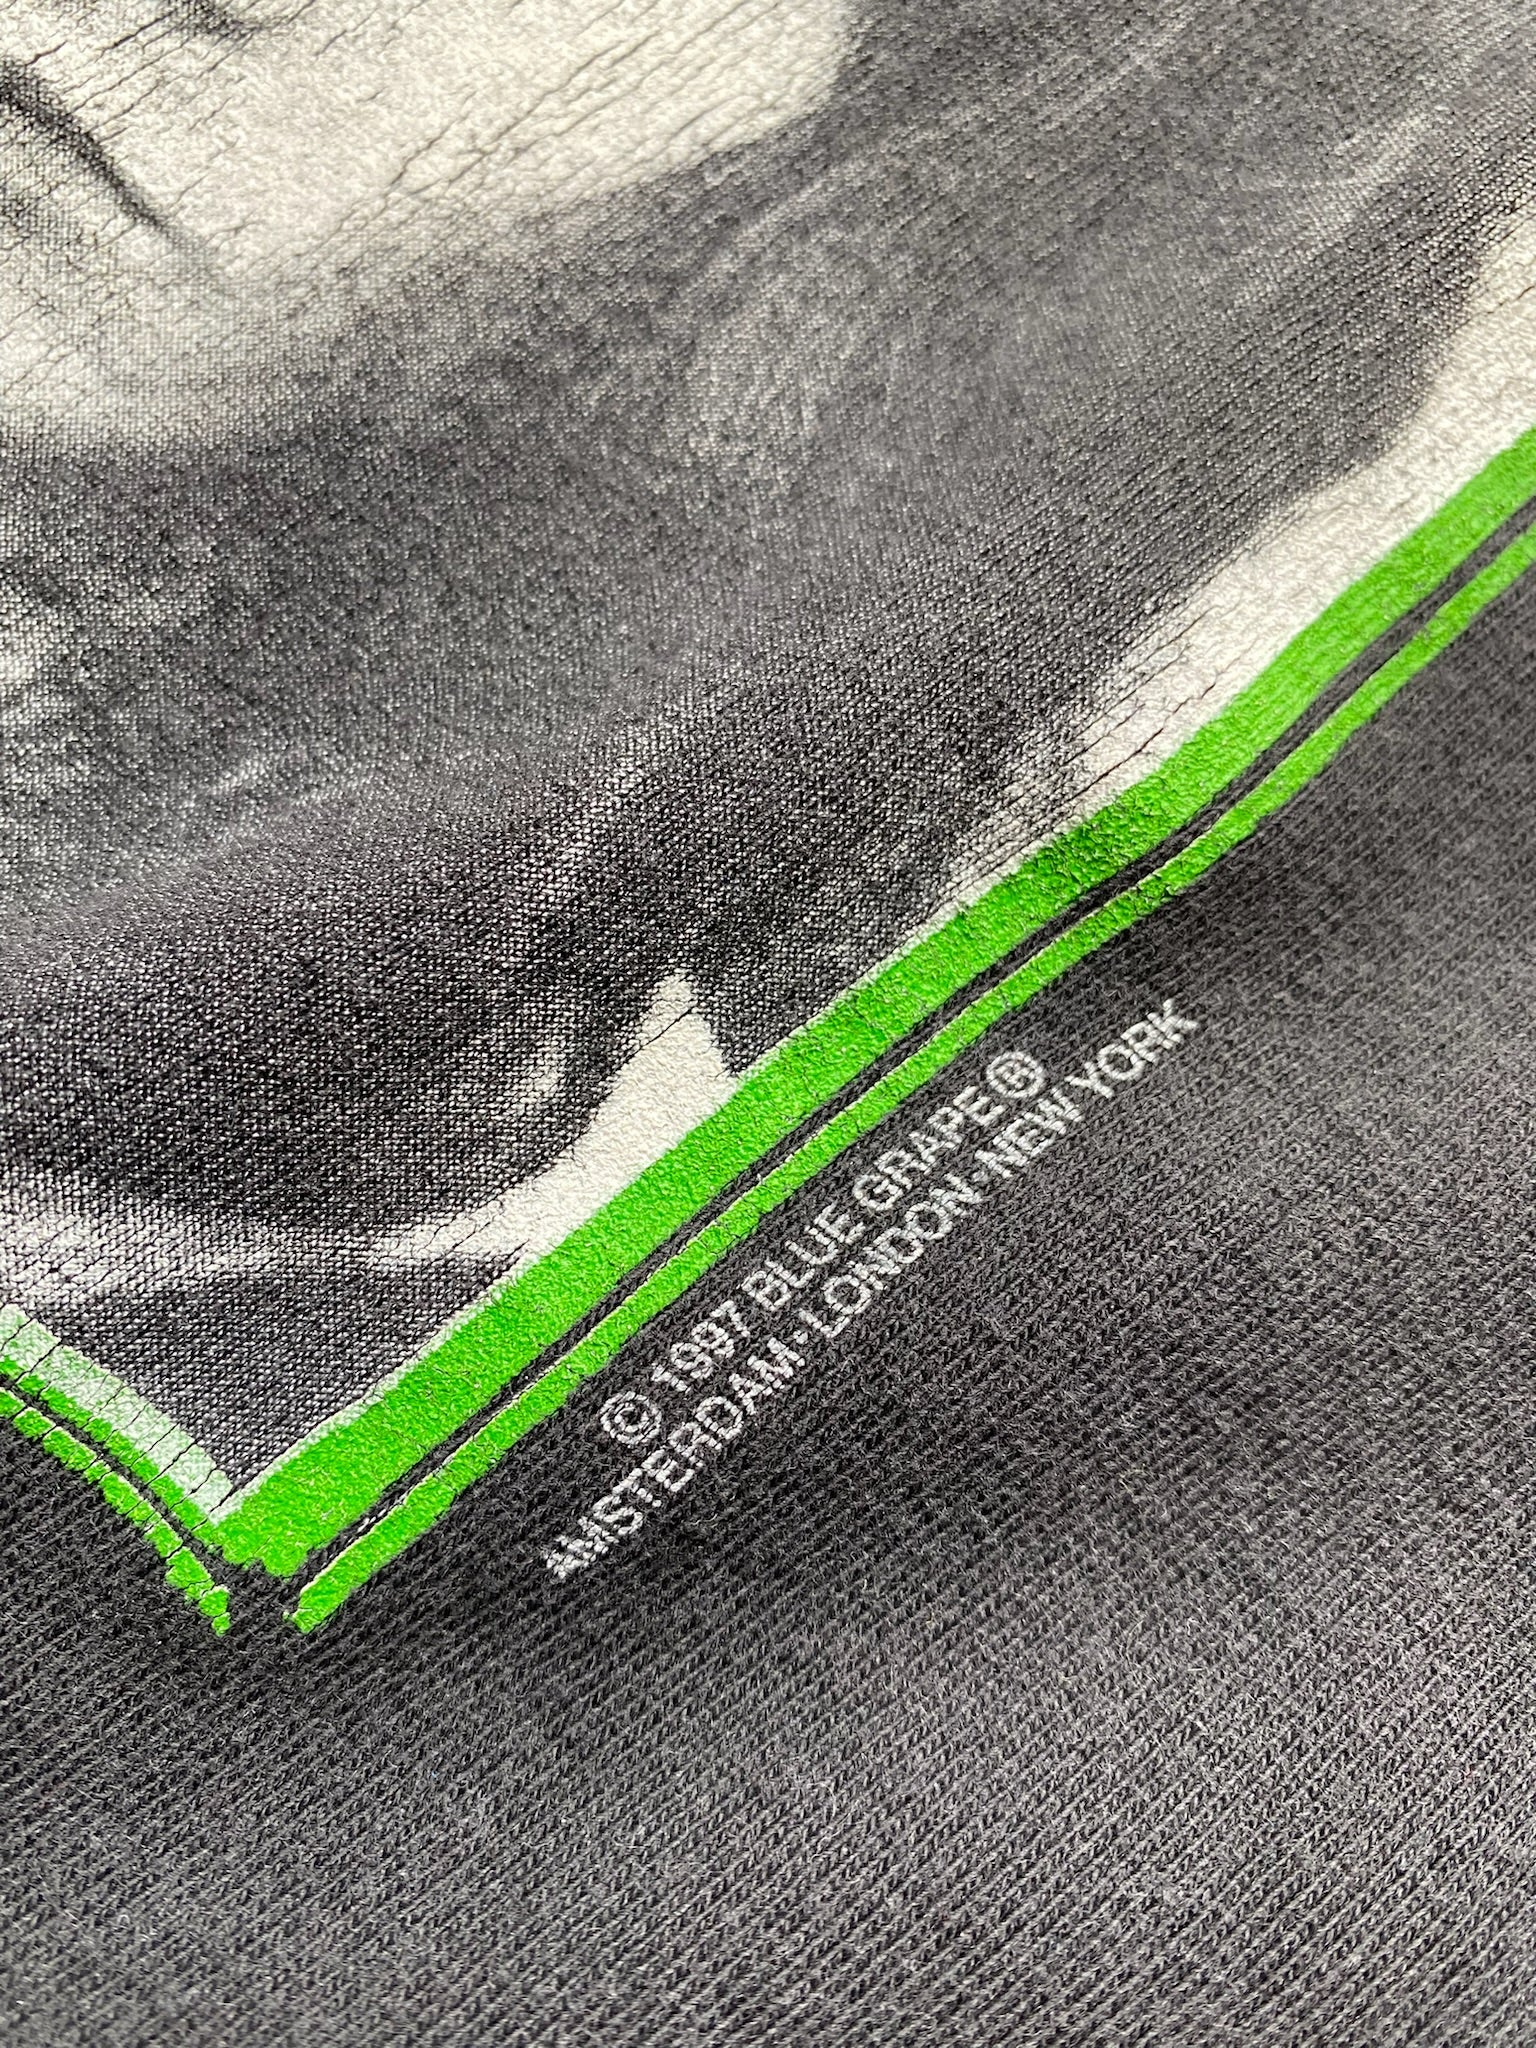 Vintage Type O Negative Green Men 1997 T-Shirt – Fruit Of The Doom